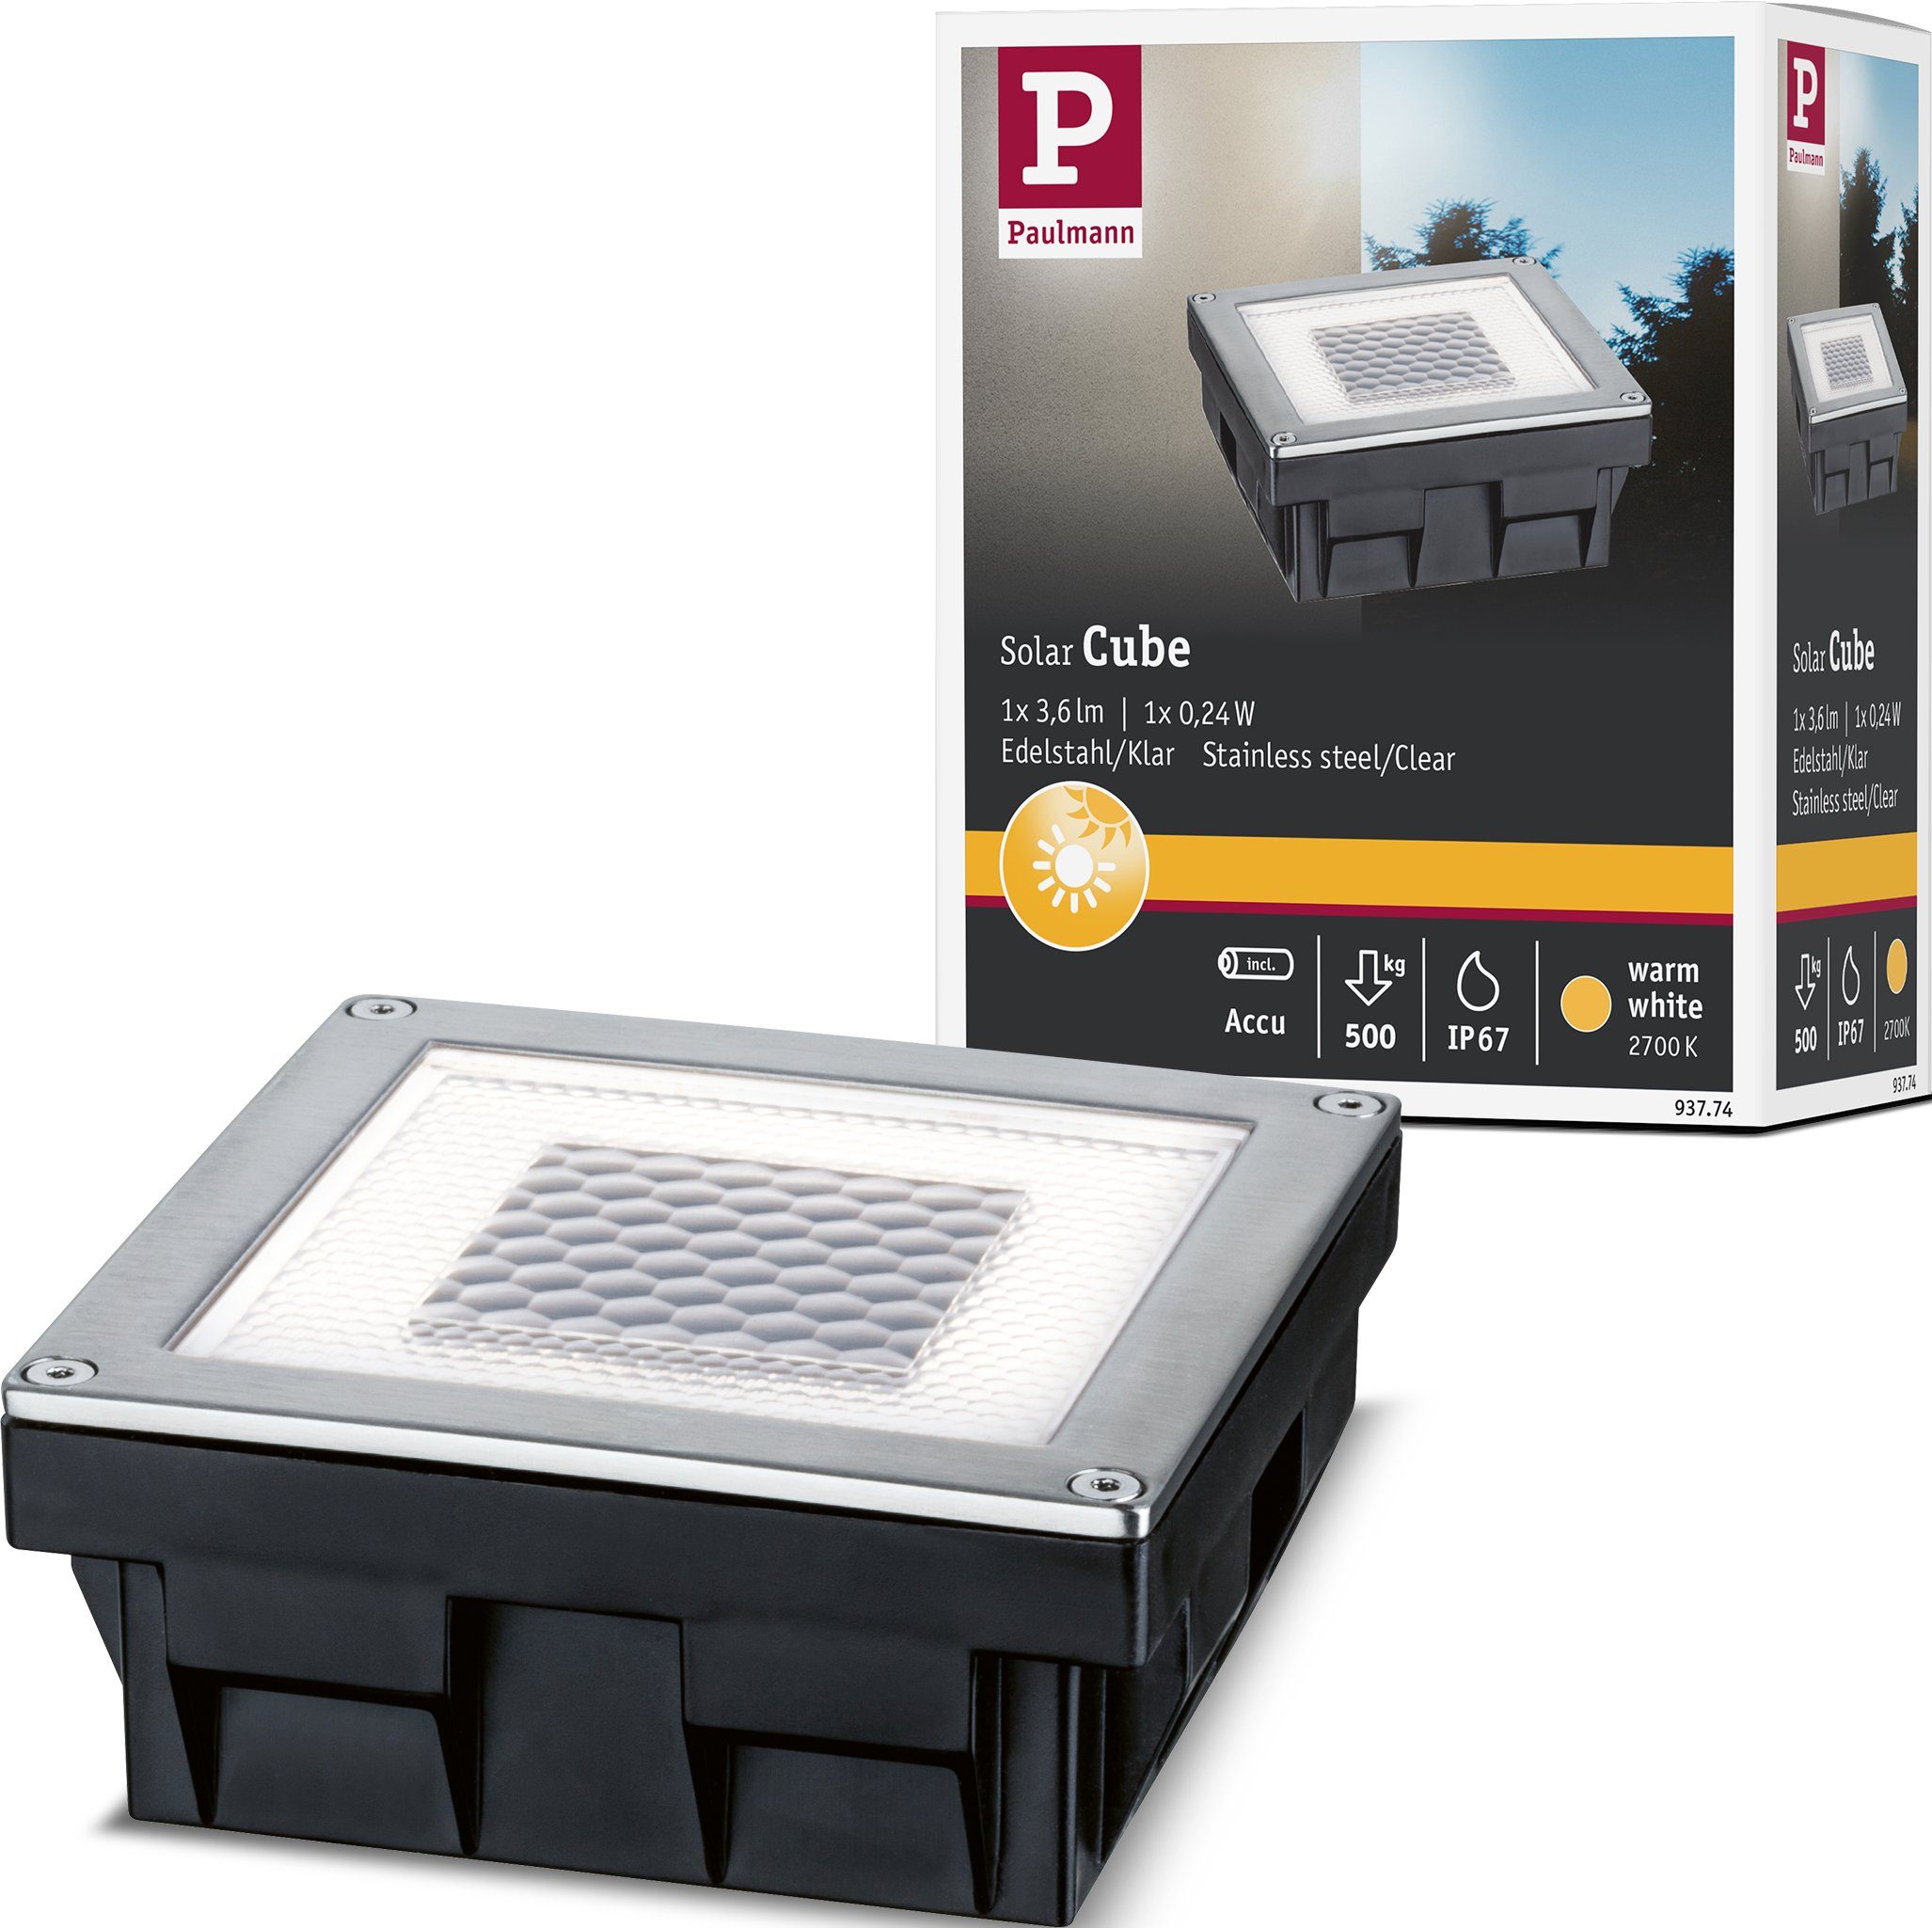 Einbauleuchte Warmweiß, Solar, Cube, Paulmann Bodeneinbauleuchten-Set, LED-Board, LED fest integriert, Edelstahl LED